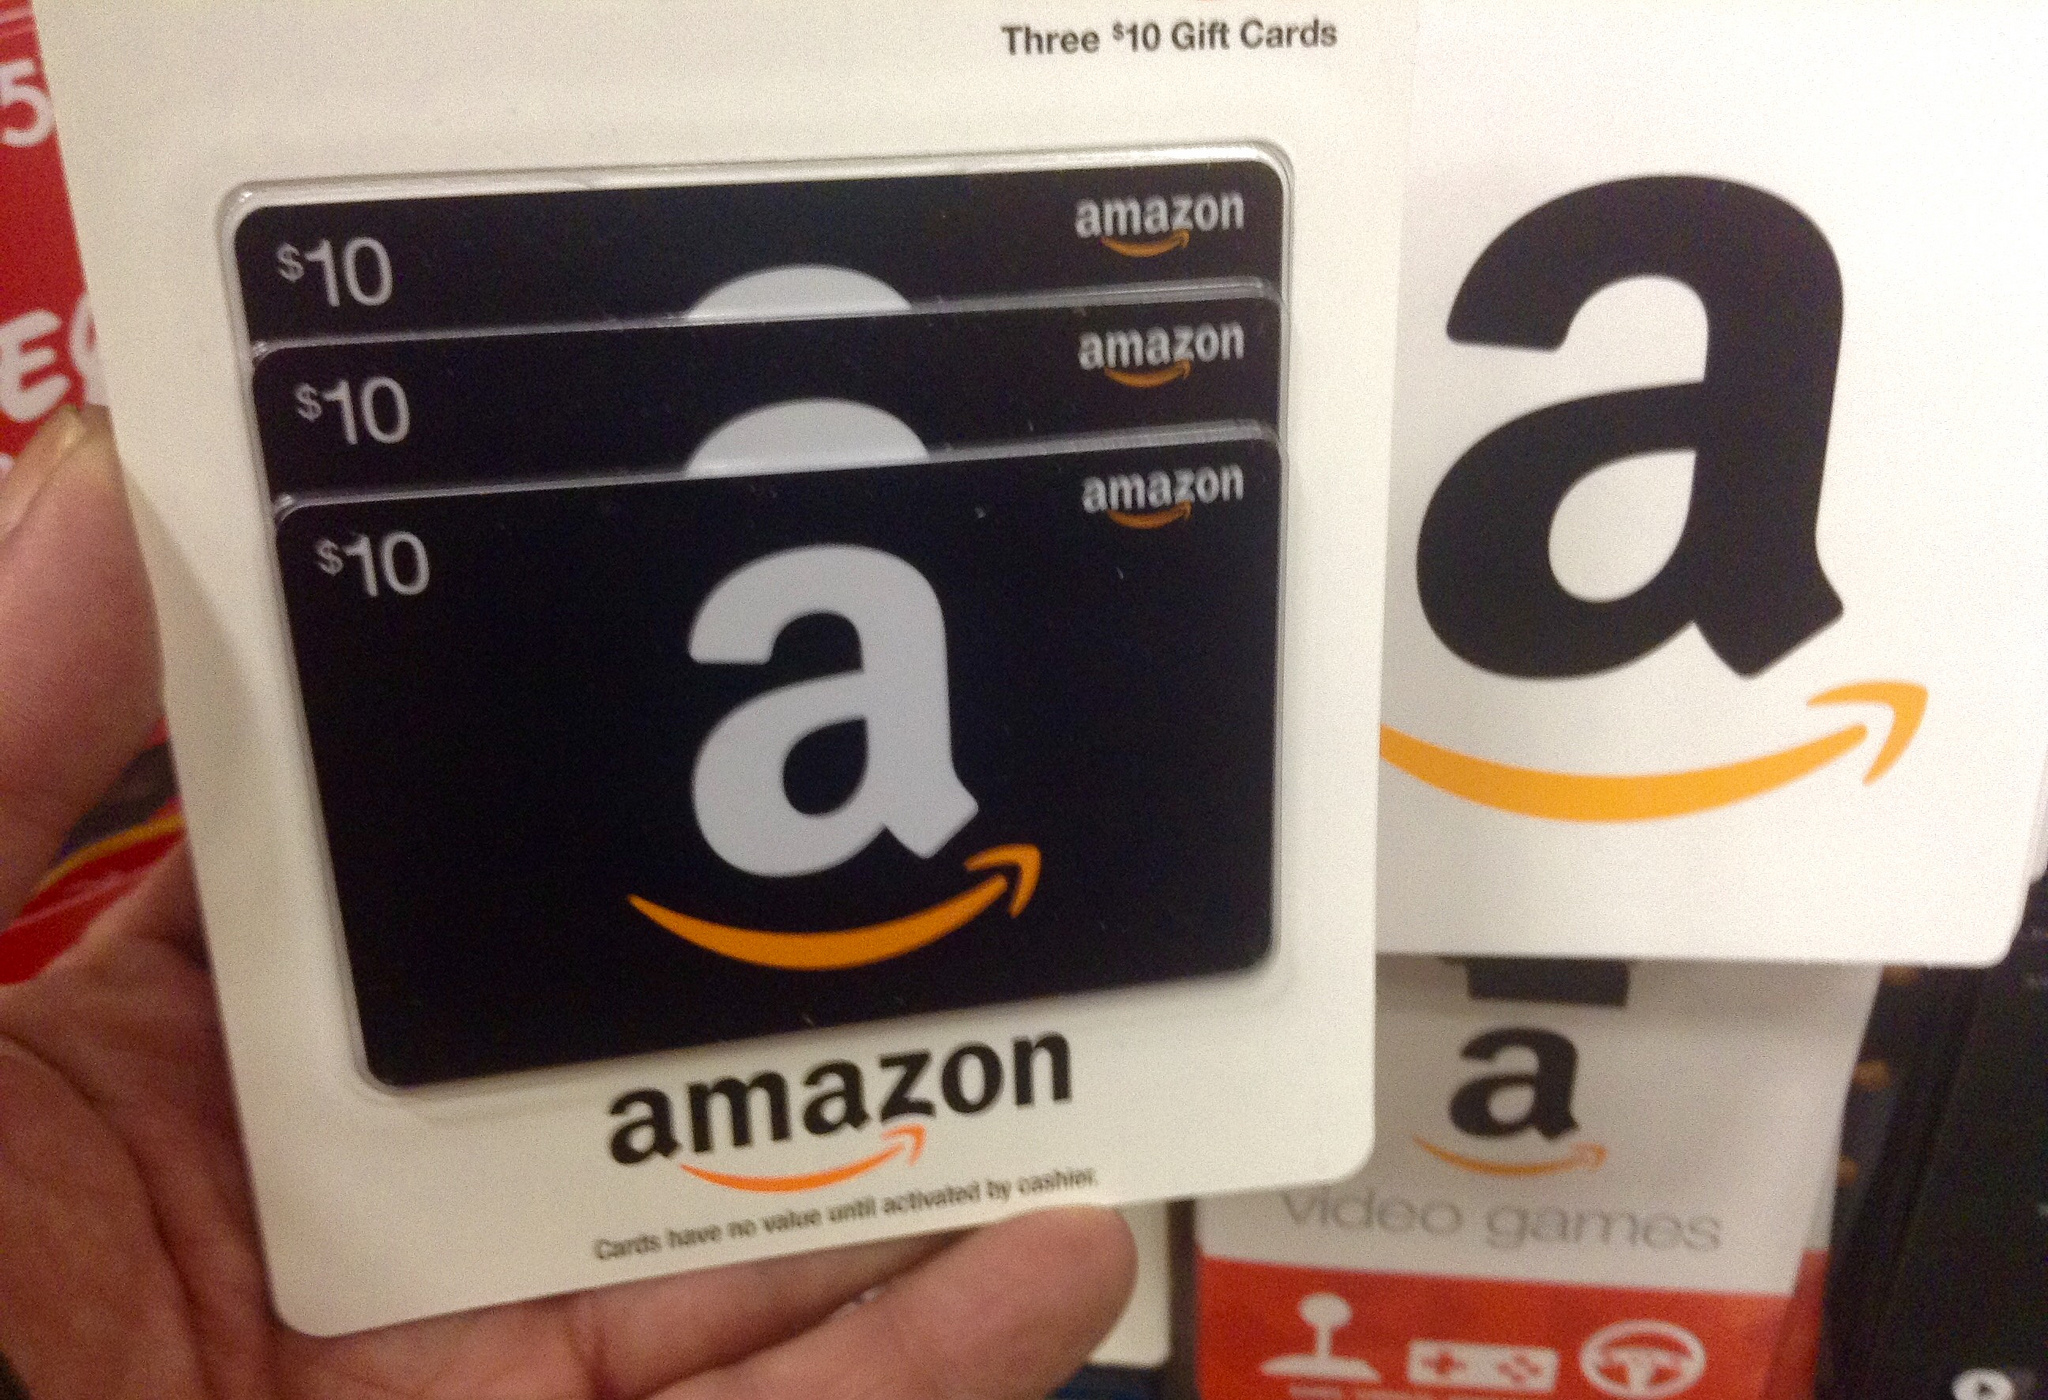 Amazon.com: Gift Card Wallet